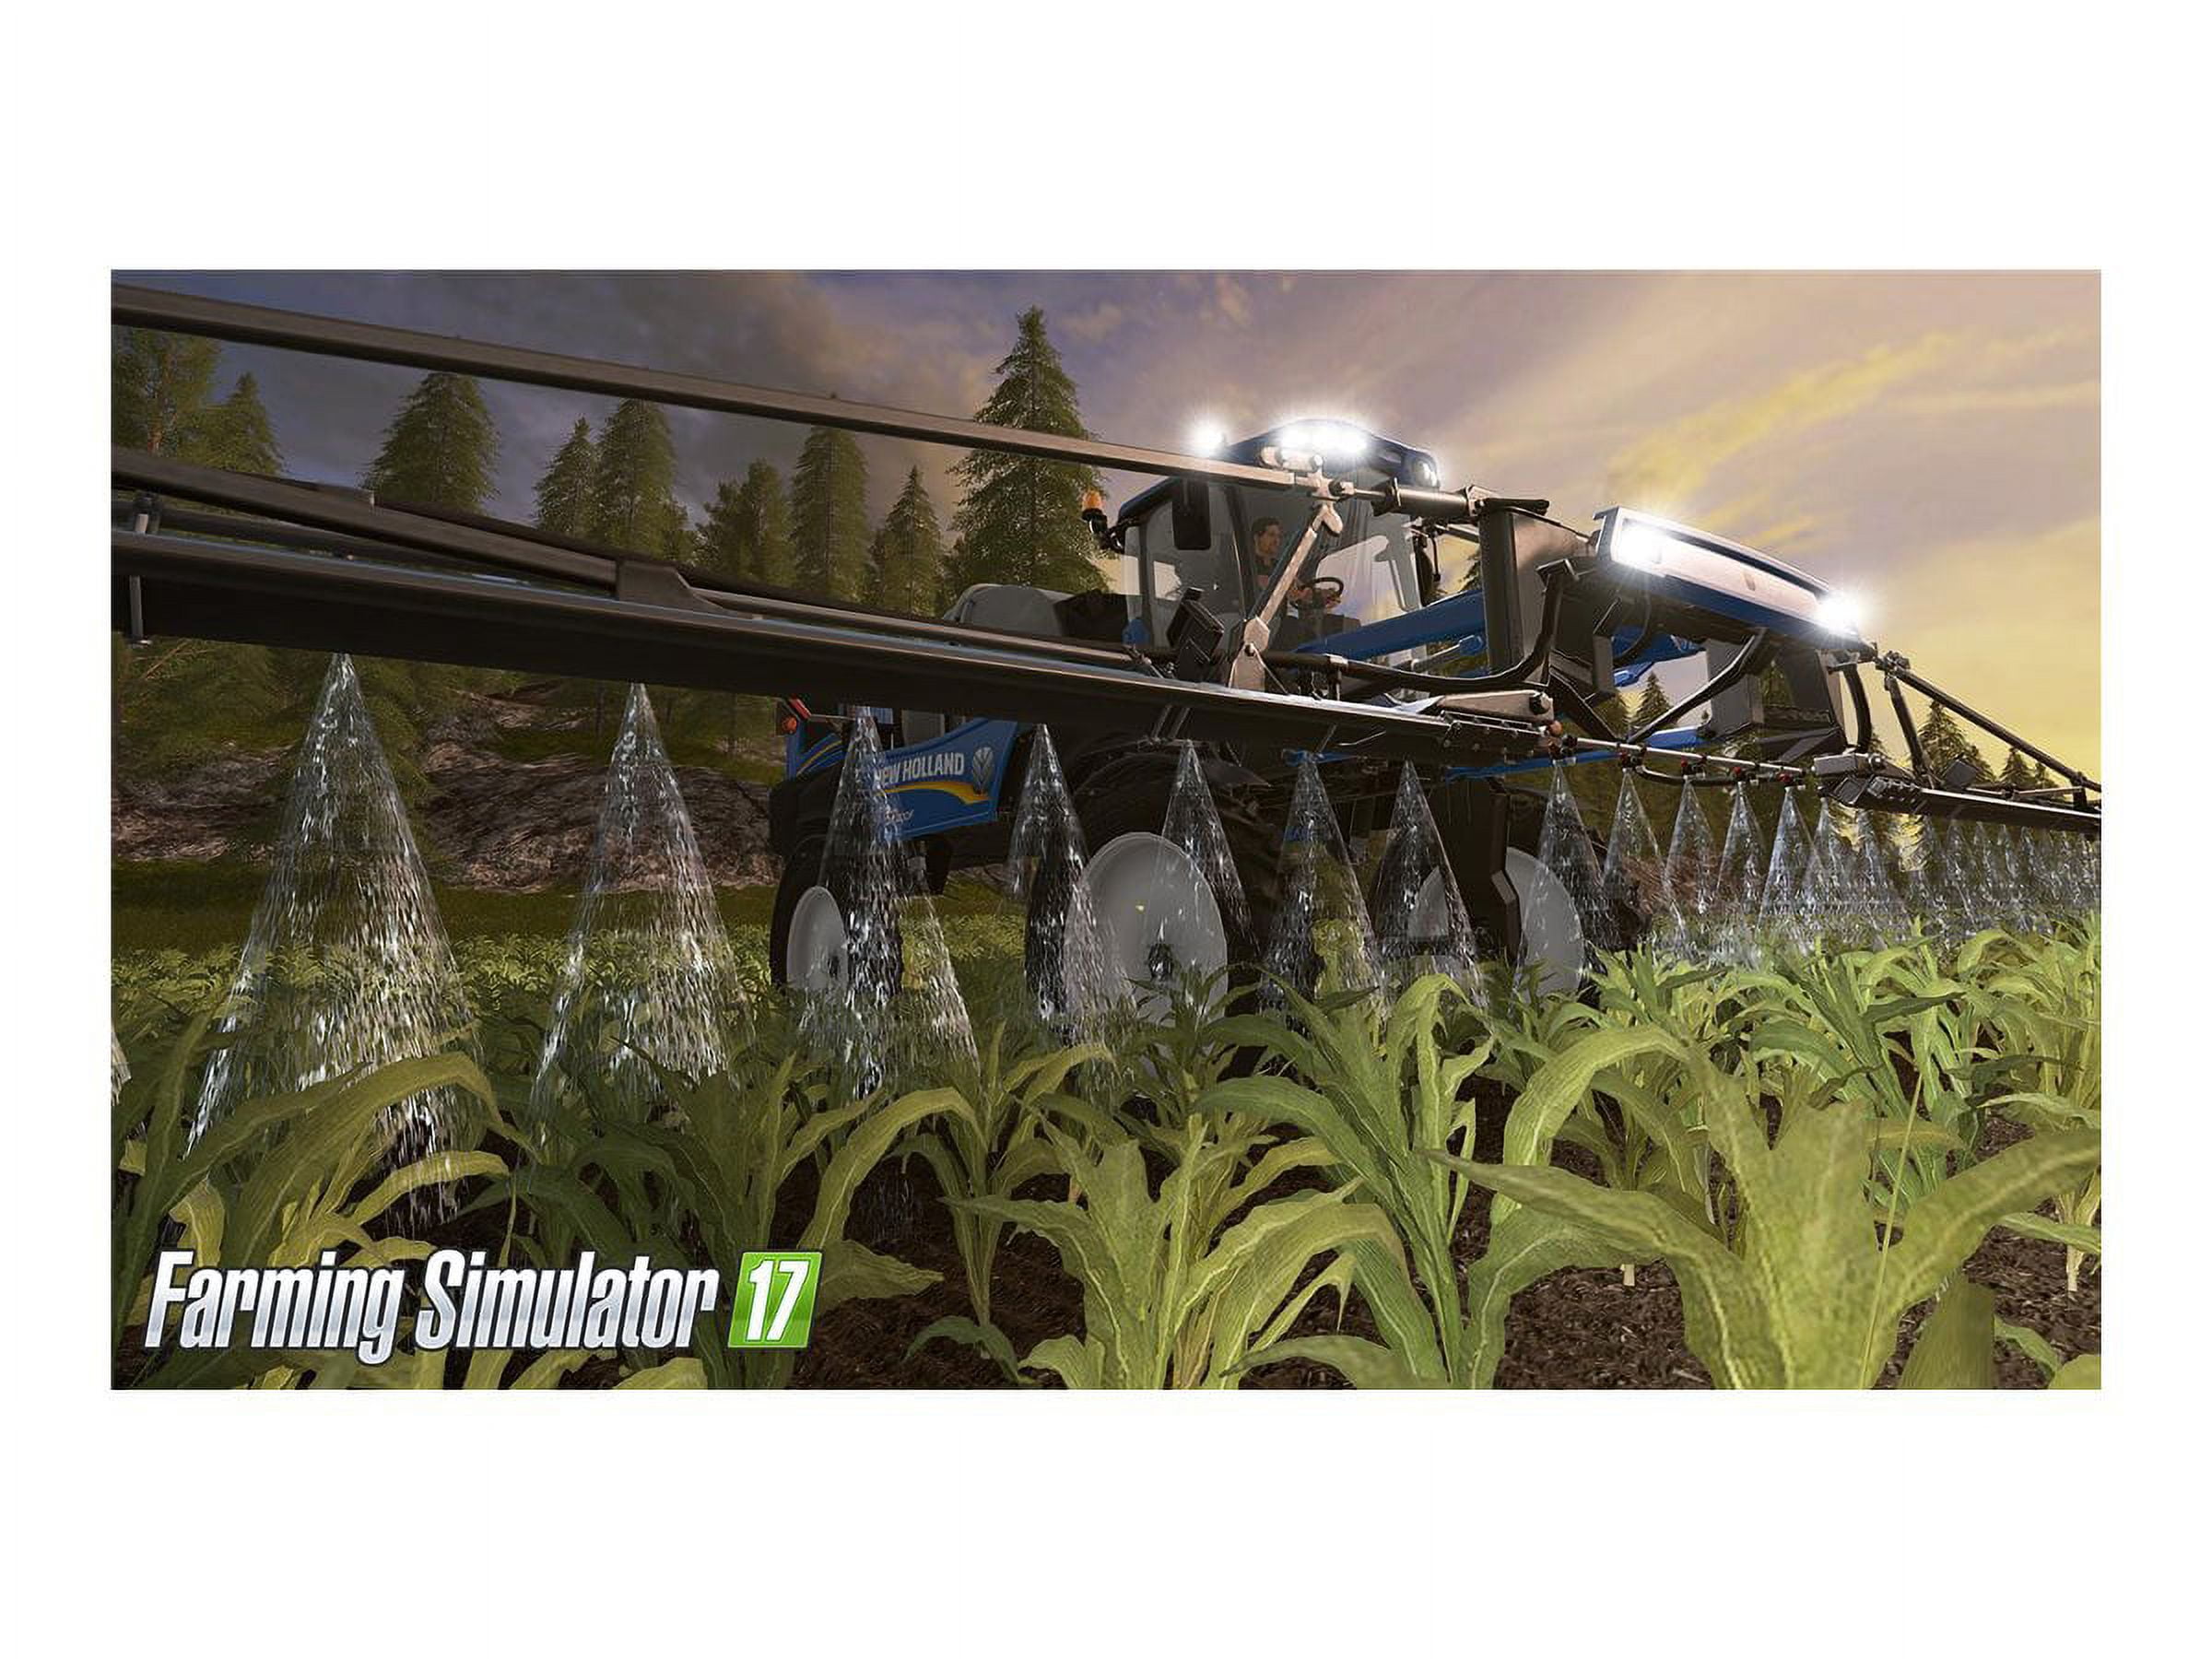 Maximum Farming Simulator 20, CD, Classical, Sony Music Ent